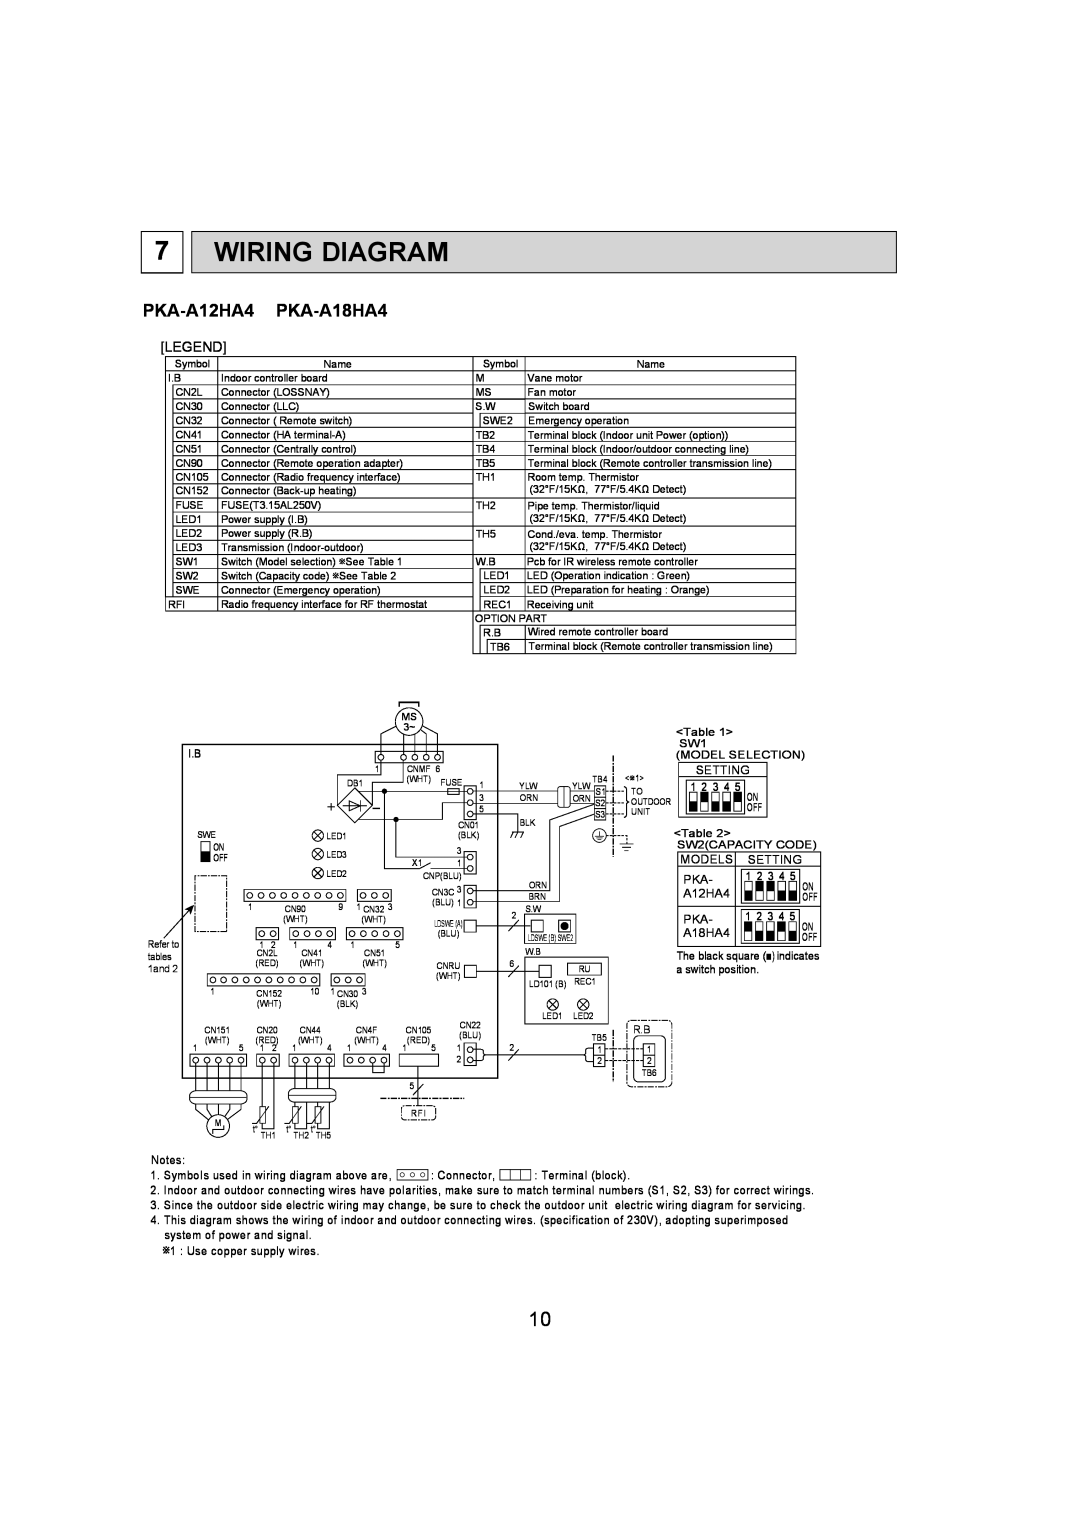 Mitsumi electronic PKA-A12HA4 service manual Wiring Diagram, PKA-A18HA4 